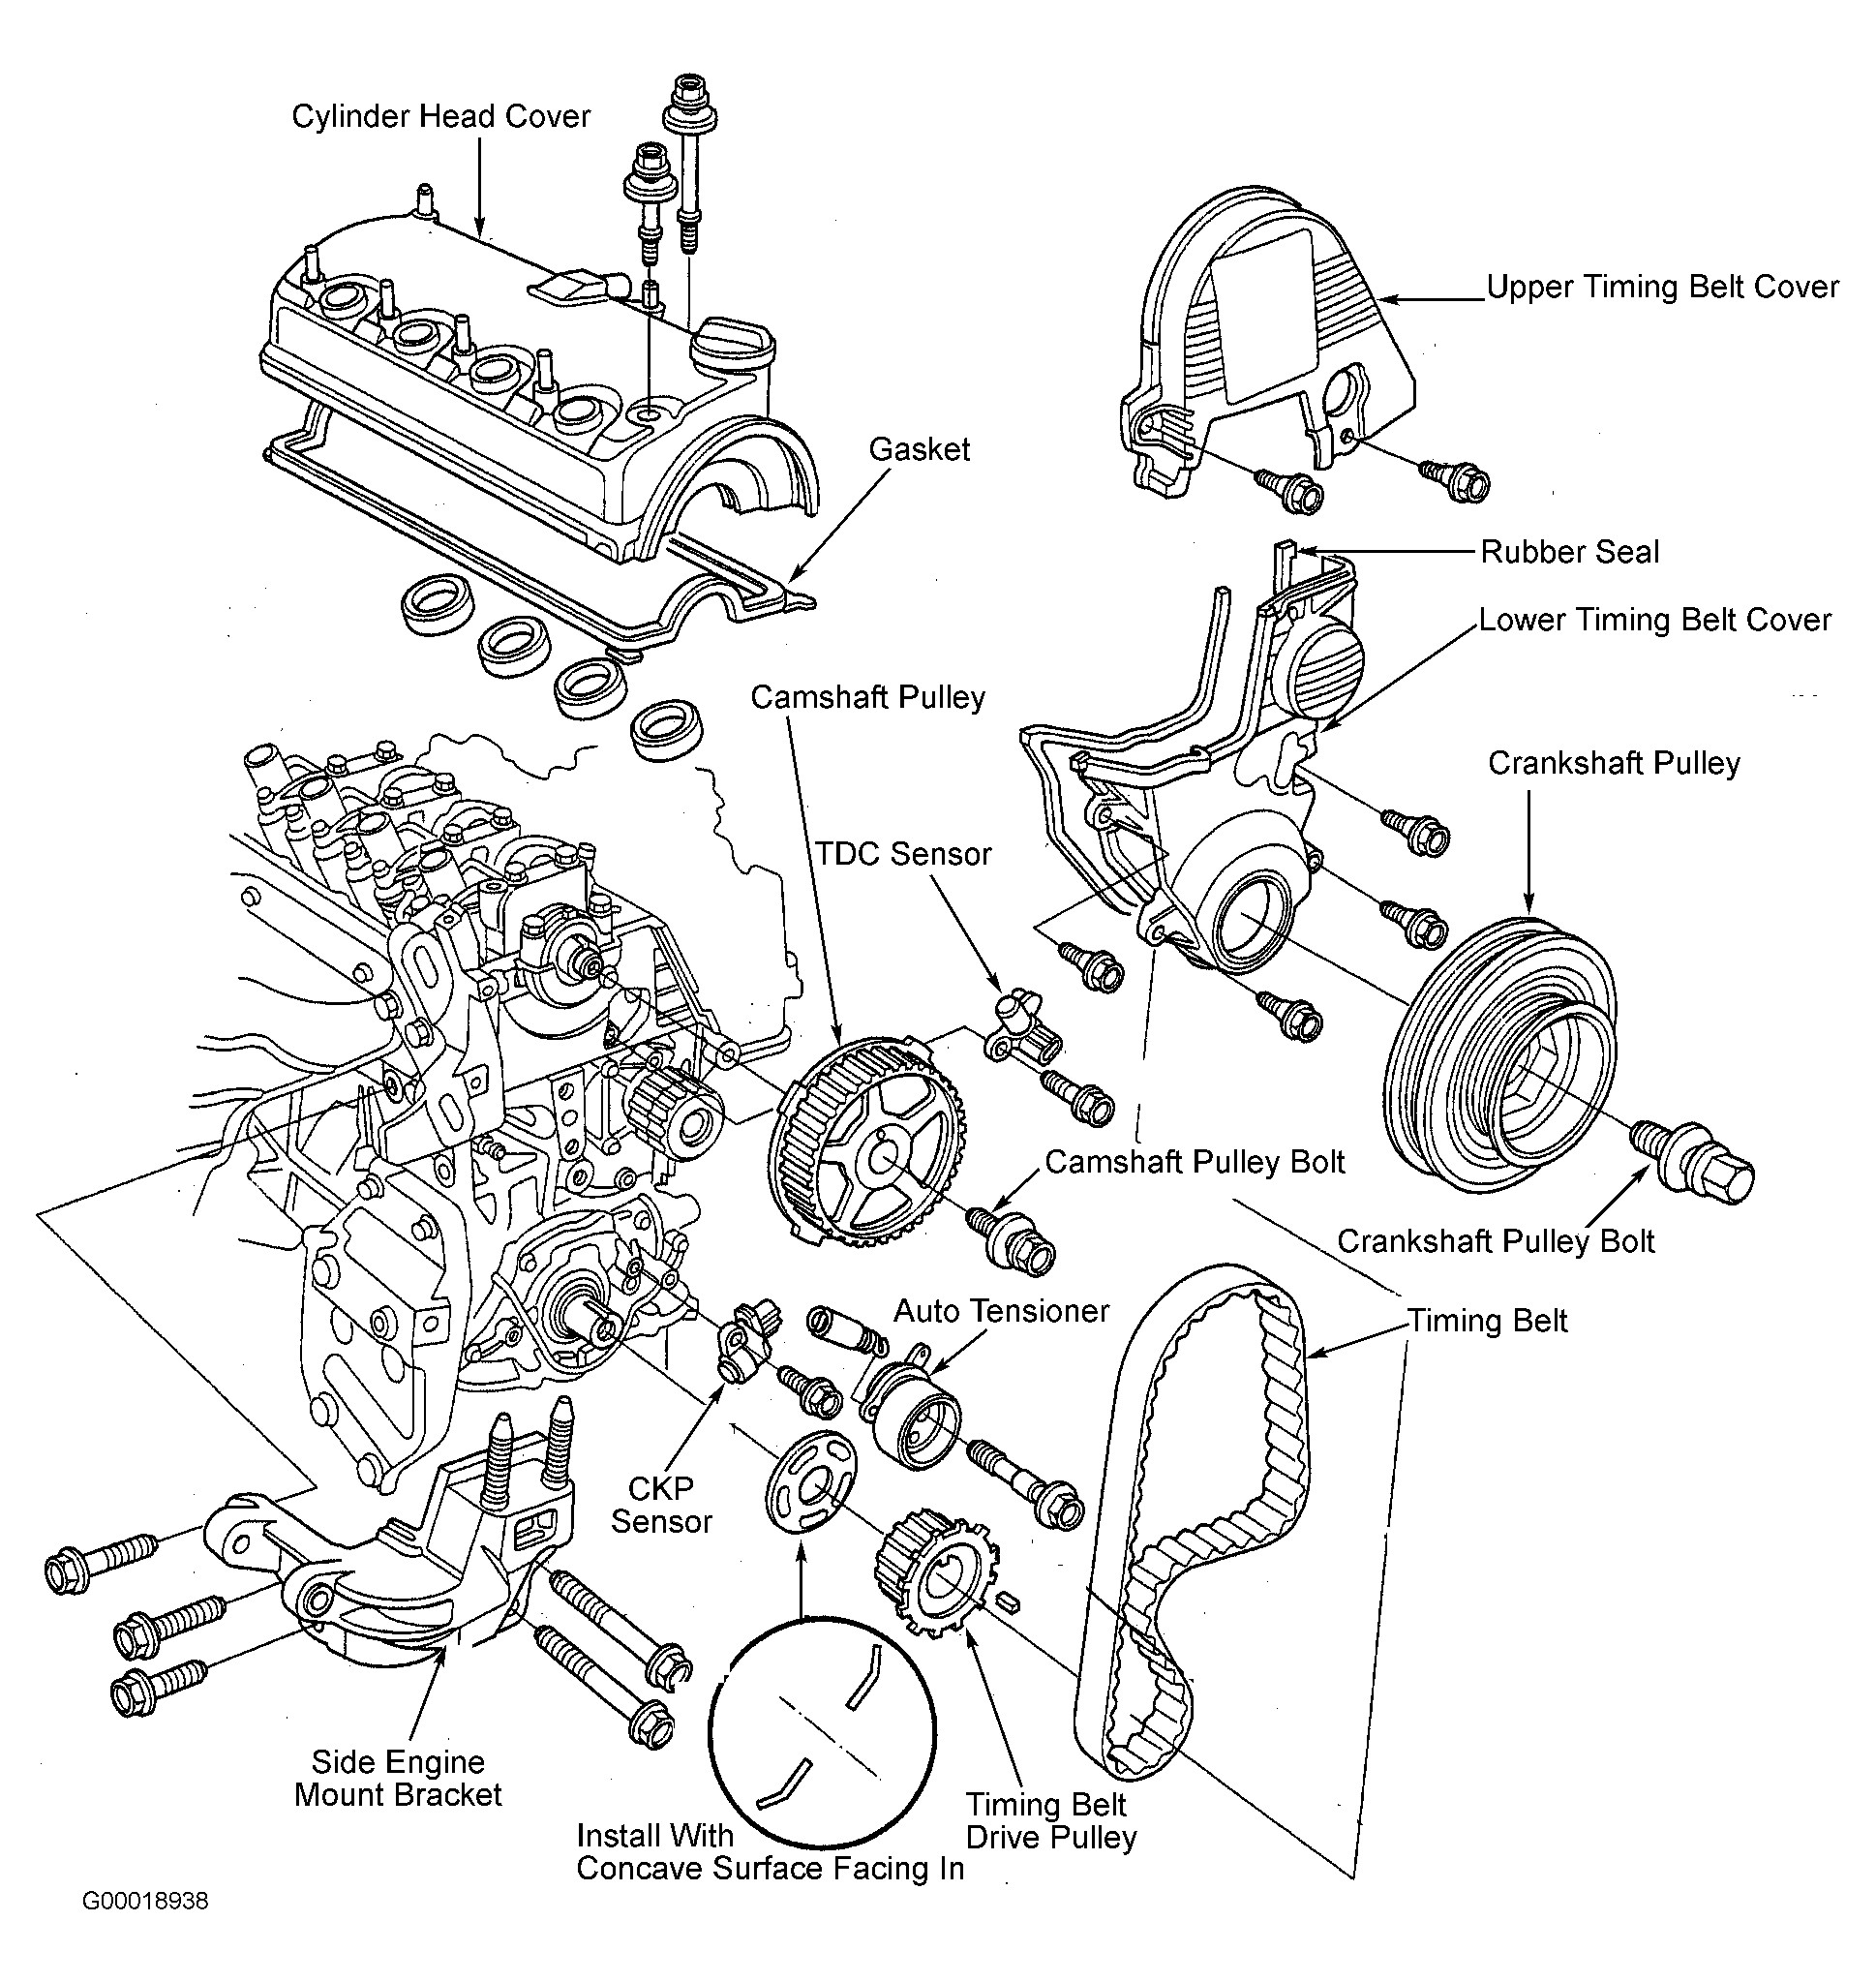 2002 Honda Civic Engine Diagram Honda Civic Parts Diagram Wonderful Likeness Serpentine and Timing Of 2002 Honda Civic Engine Diagram